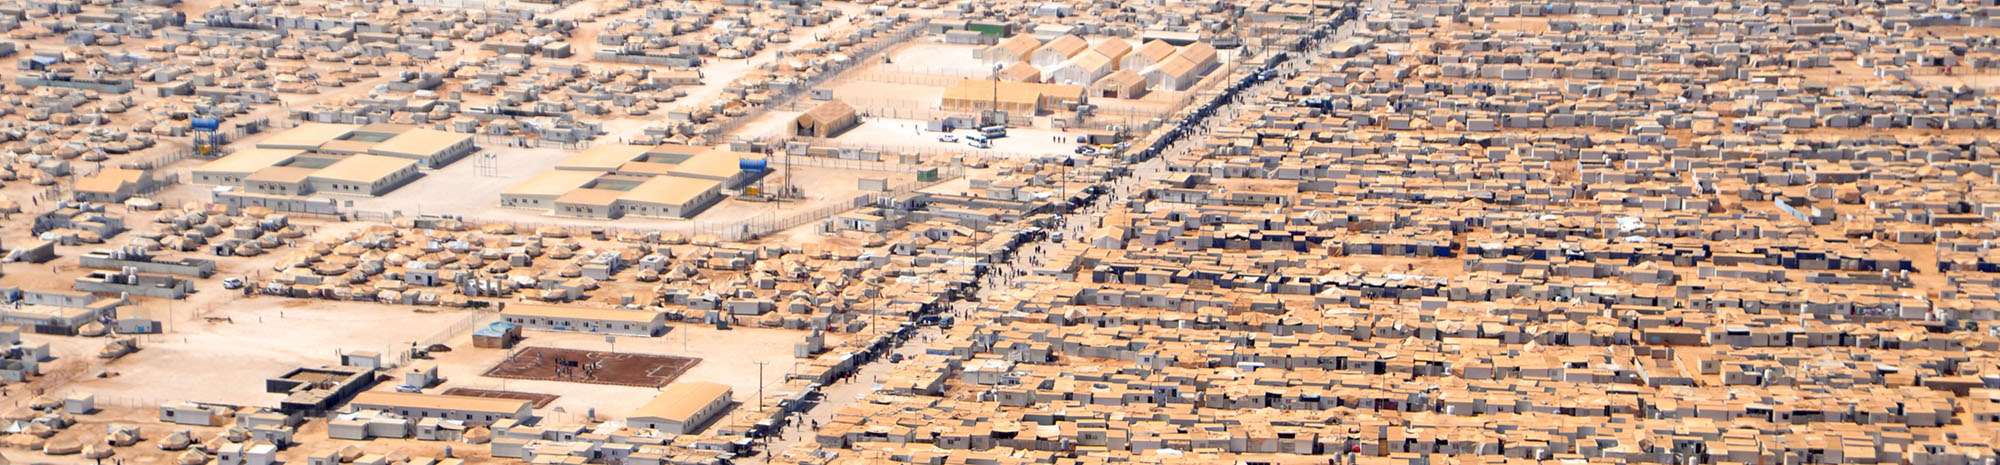 Za'atari Refugee camp aerial photo.